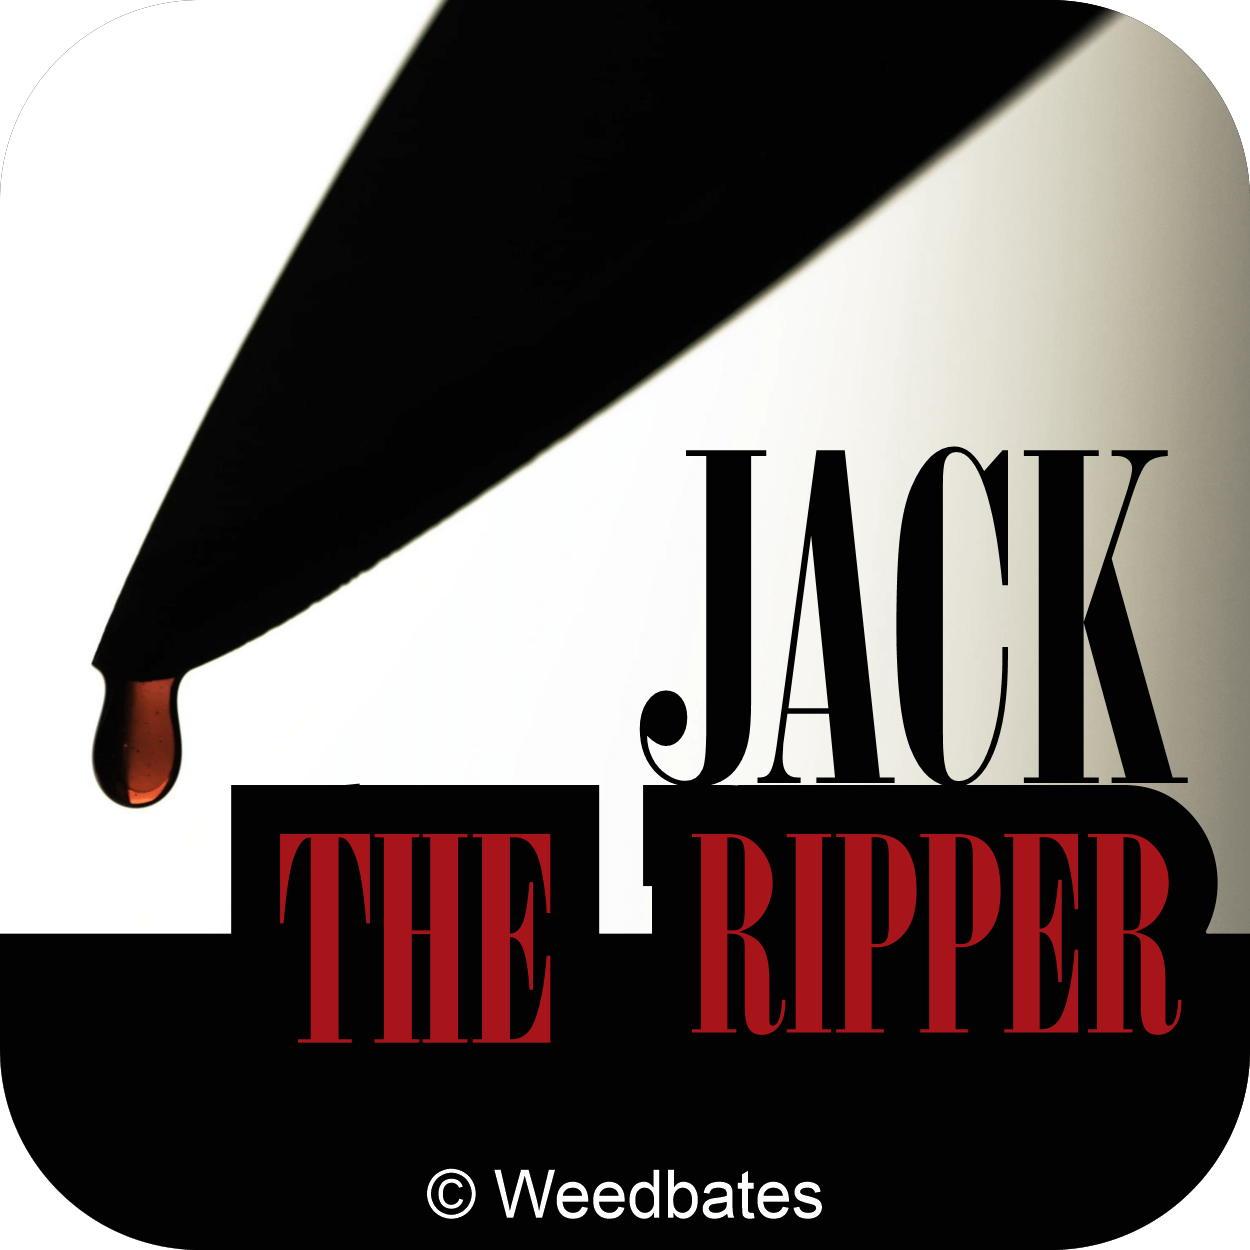 Jack the Ripper strain